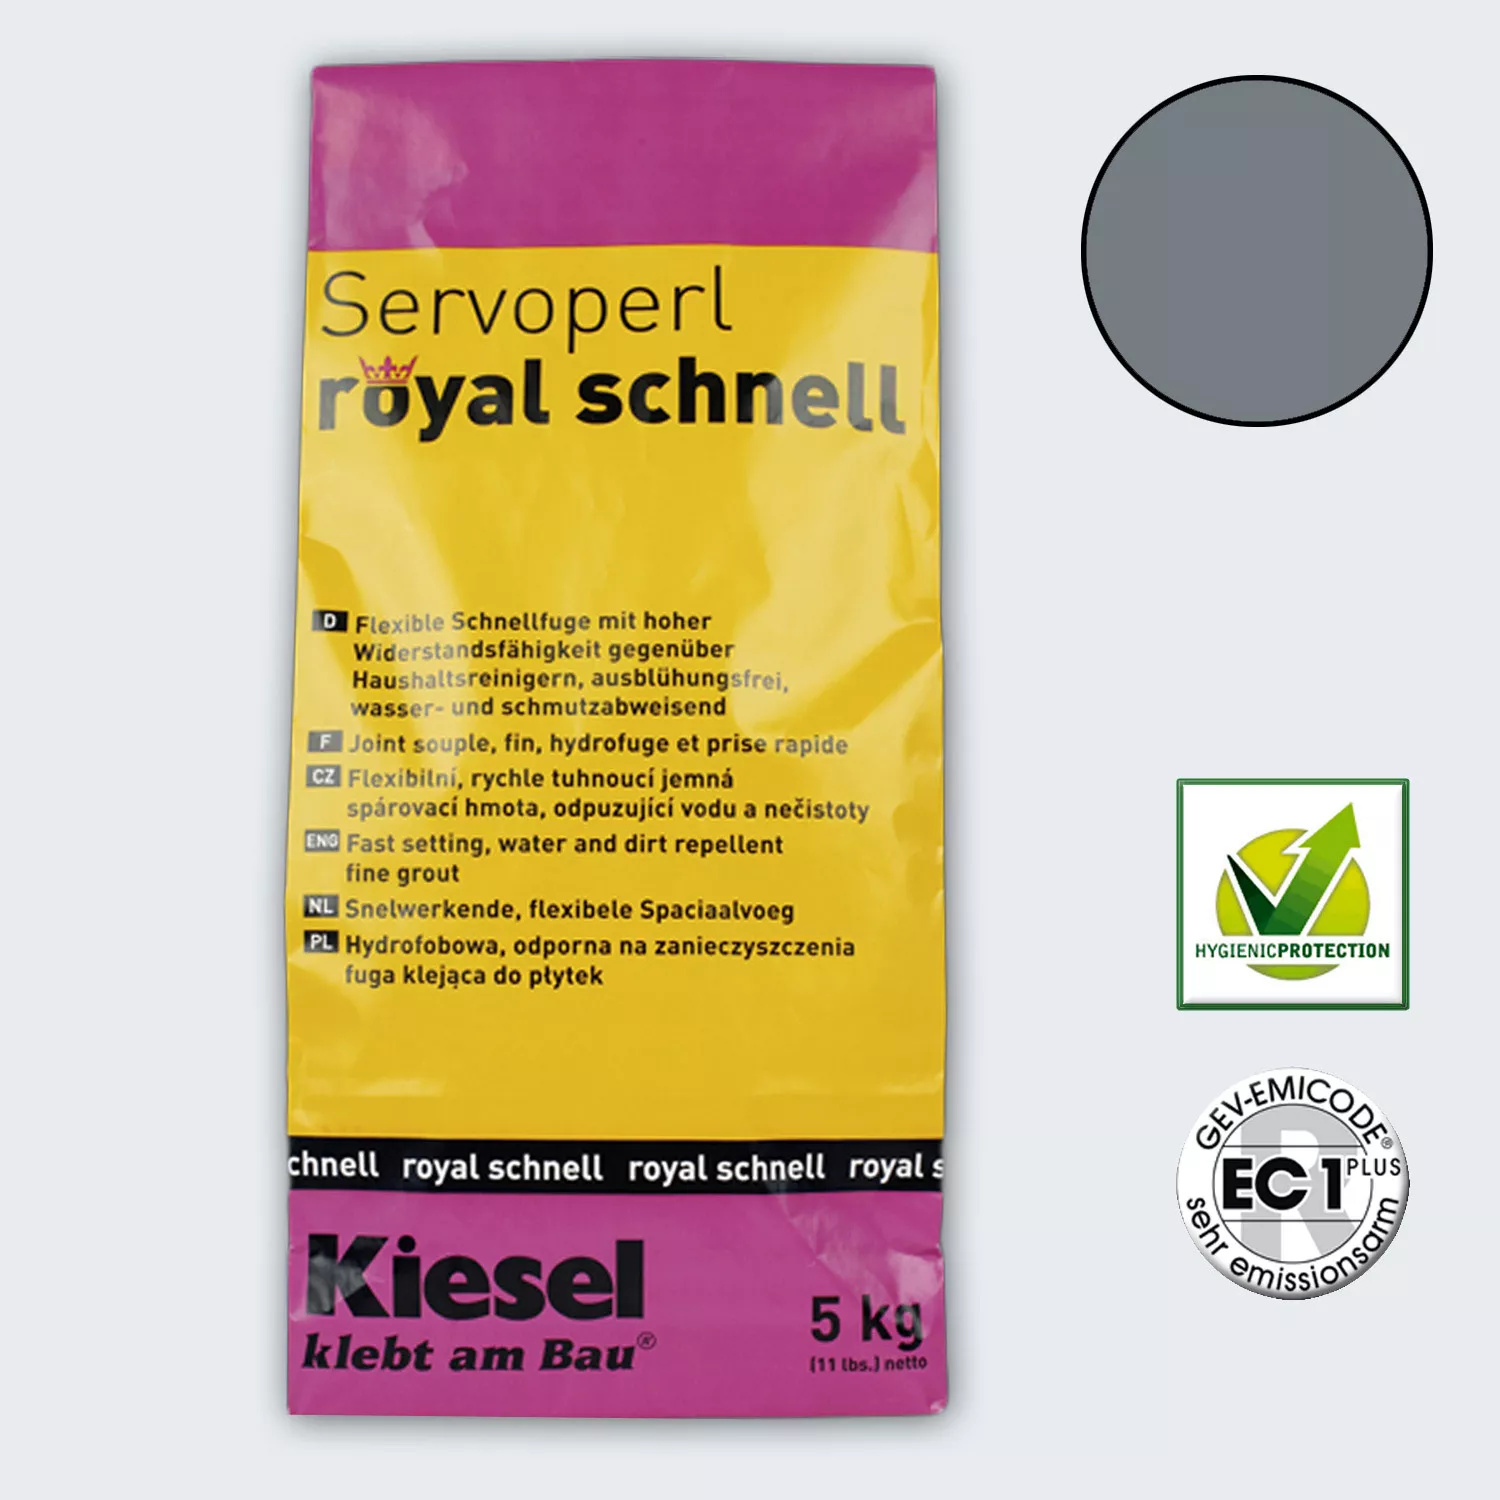 Kiesel Servoperl Royal - Junta flexível e de endurecimento rápido (basalto 5KG)